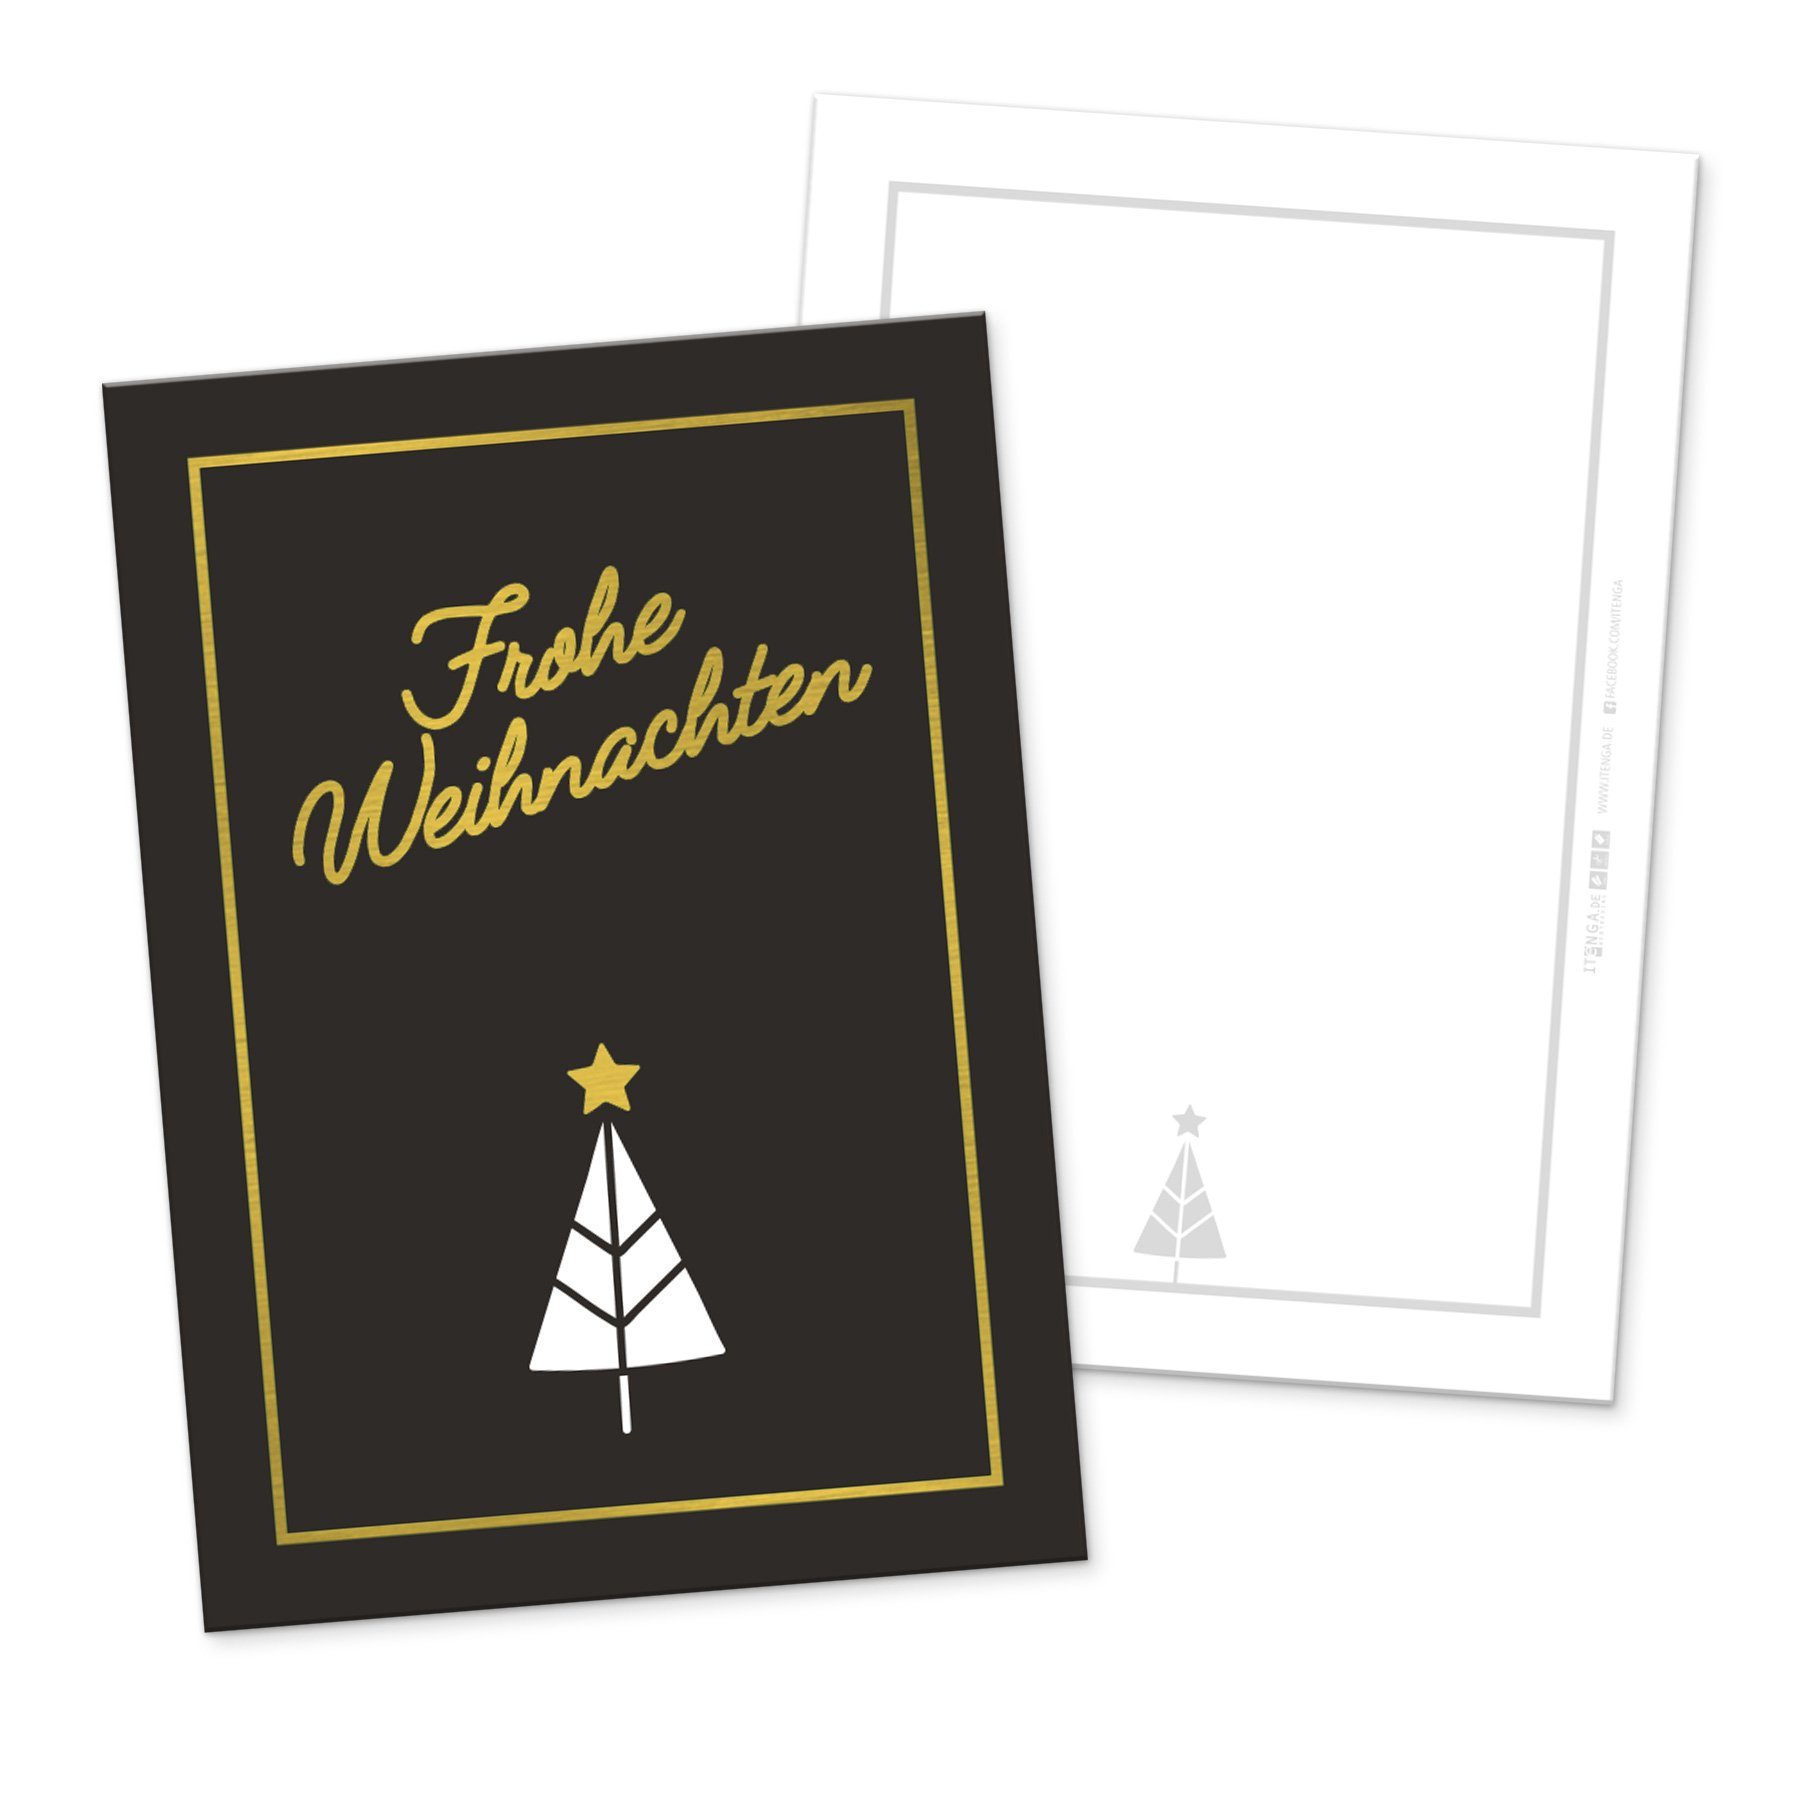 itenga Grußkarten itenga 12 x Postkarte Grußkarte Frohe Weihnachten schwarz weiß gold DI